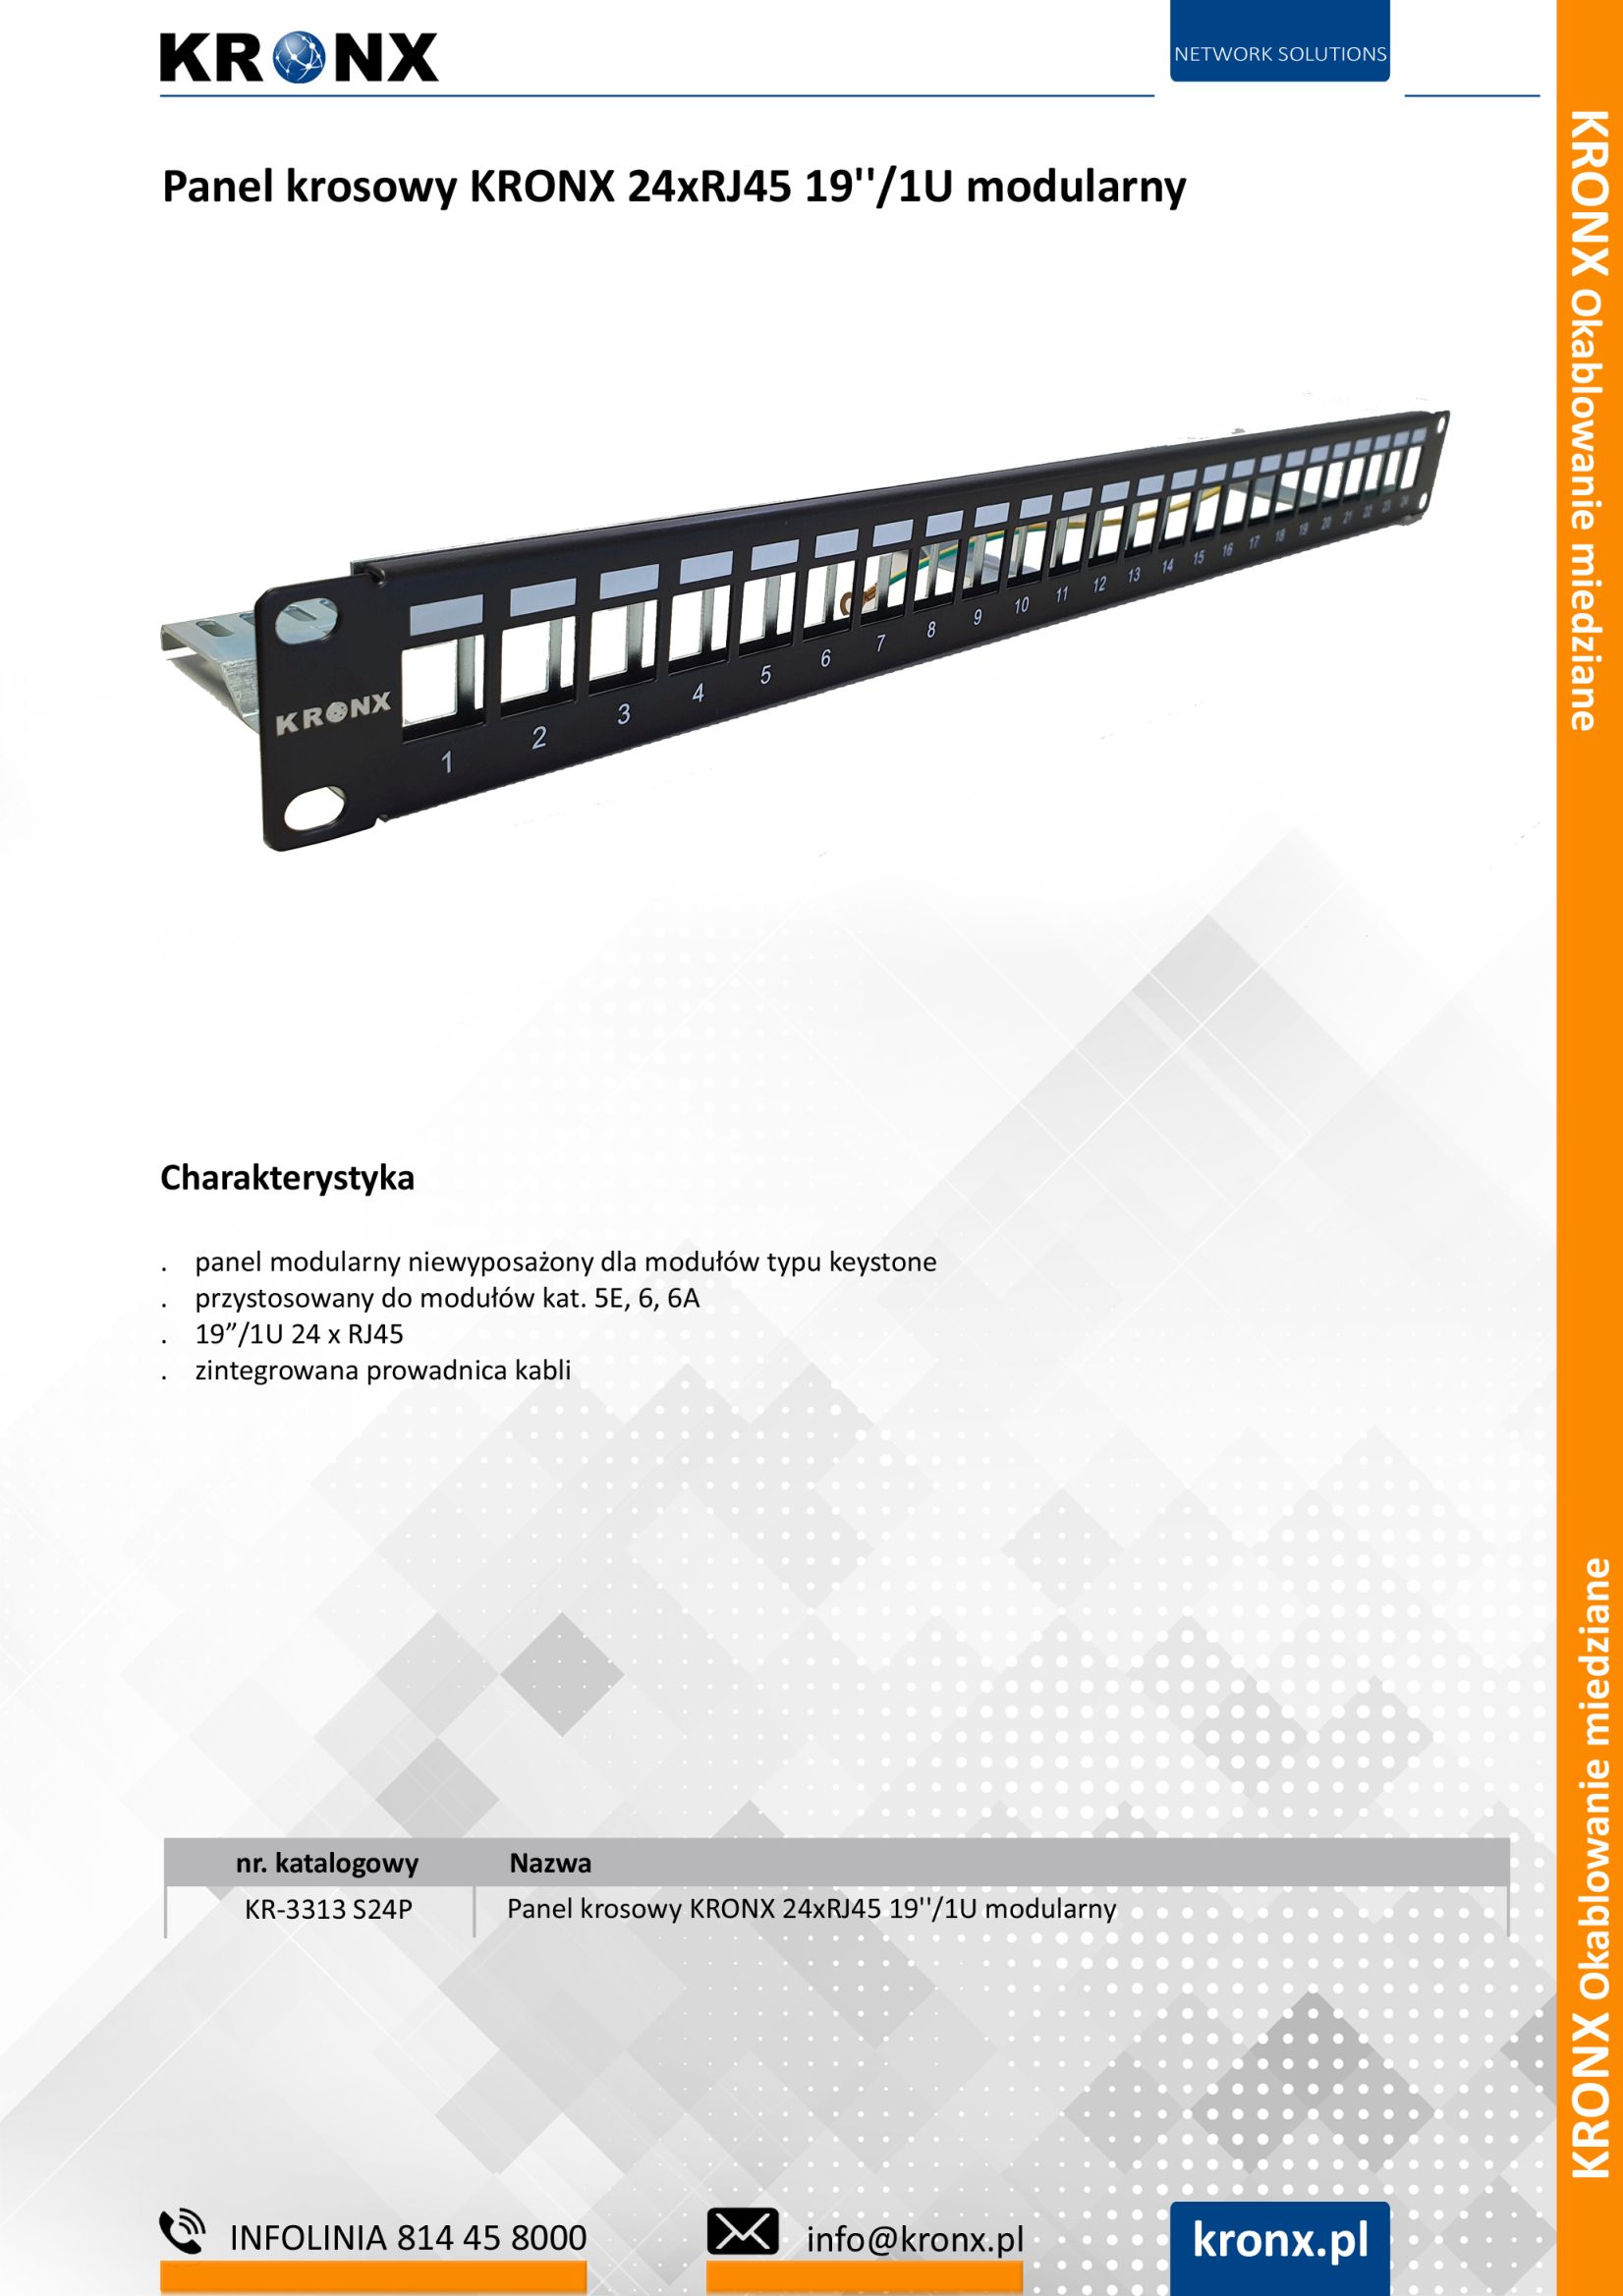 Panel krosowy KRONX 24xRJ45 191U modularny Black